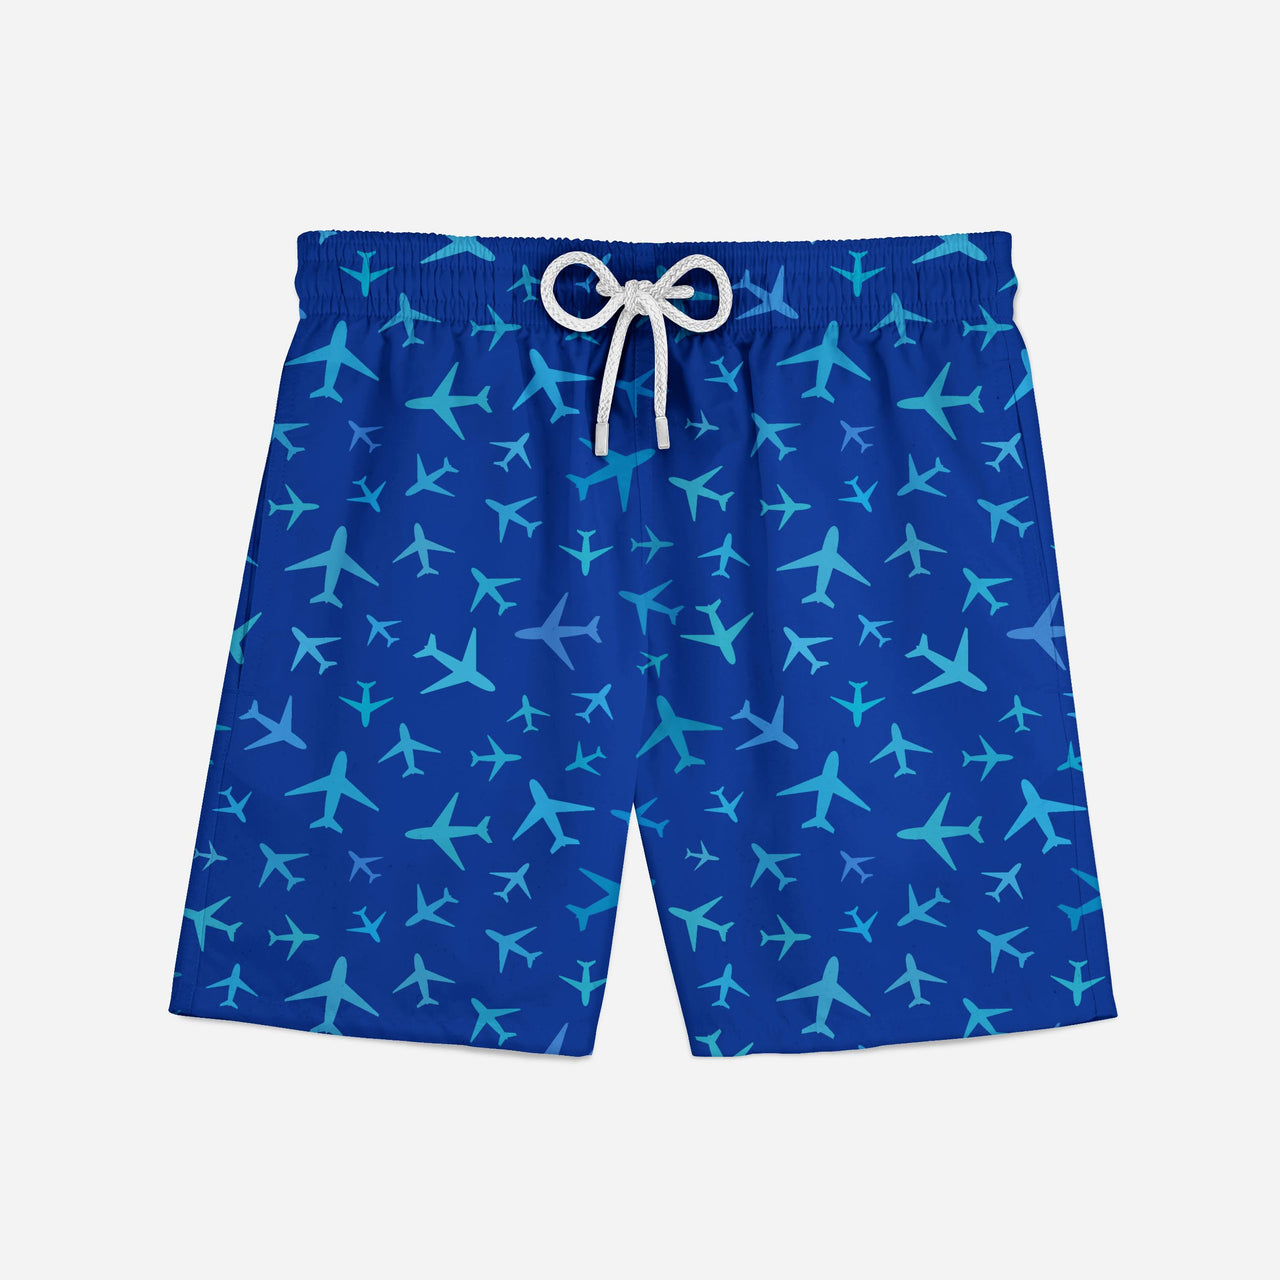 Many Airplanes (Blue) Designed Swim Trunks & Shorts